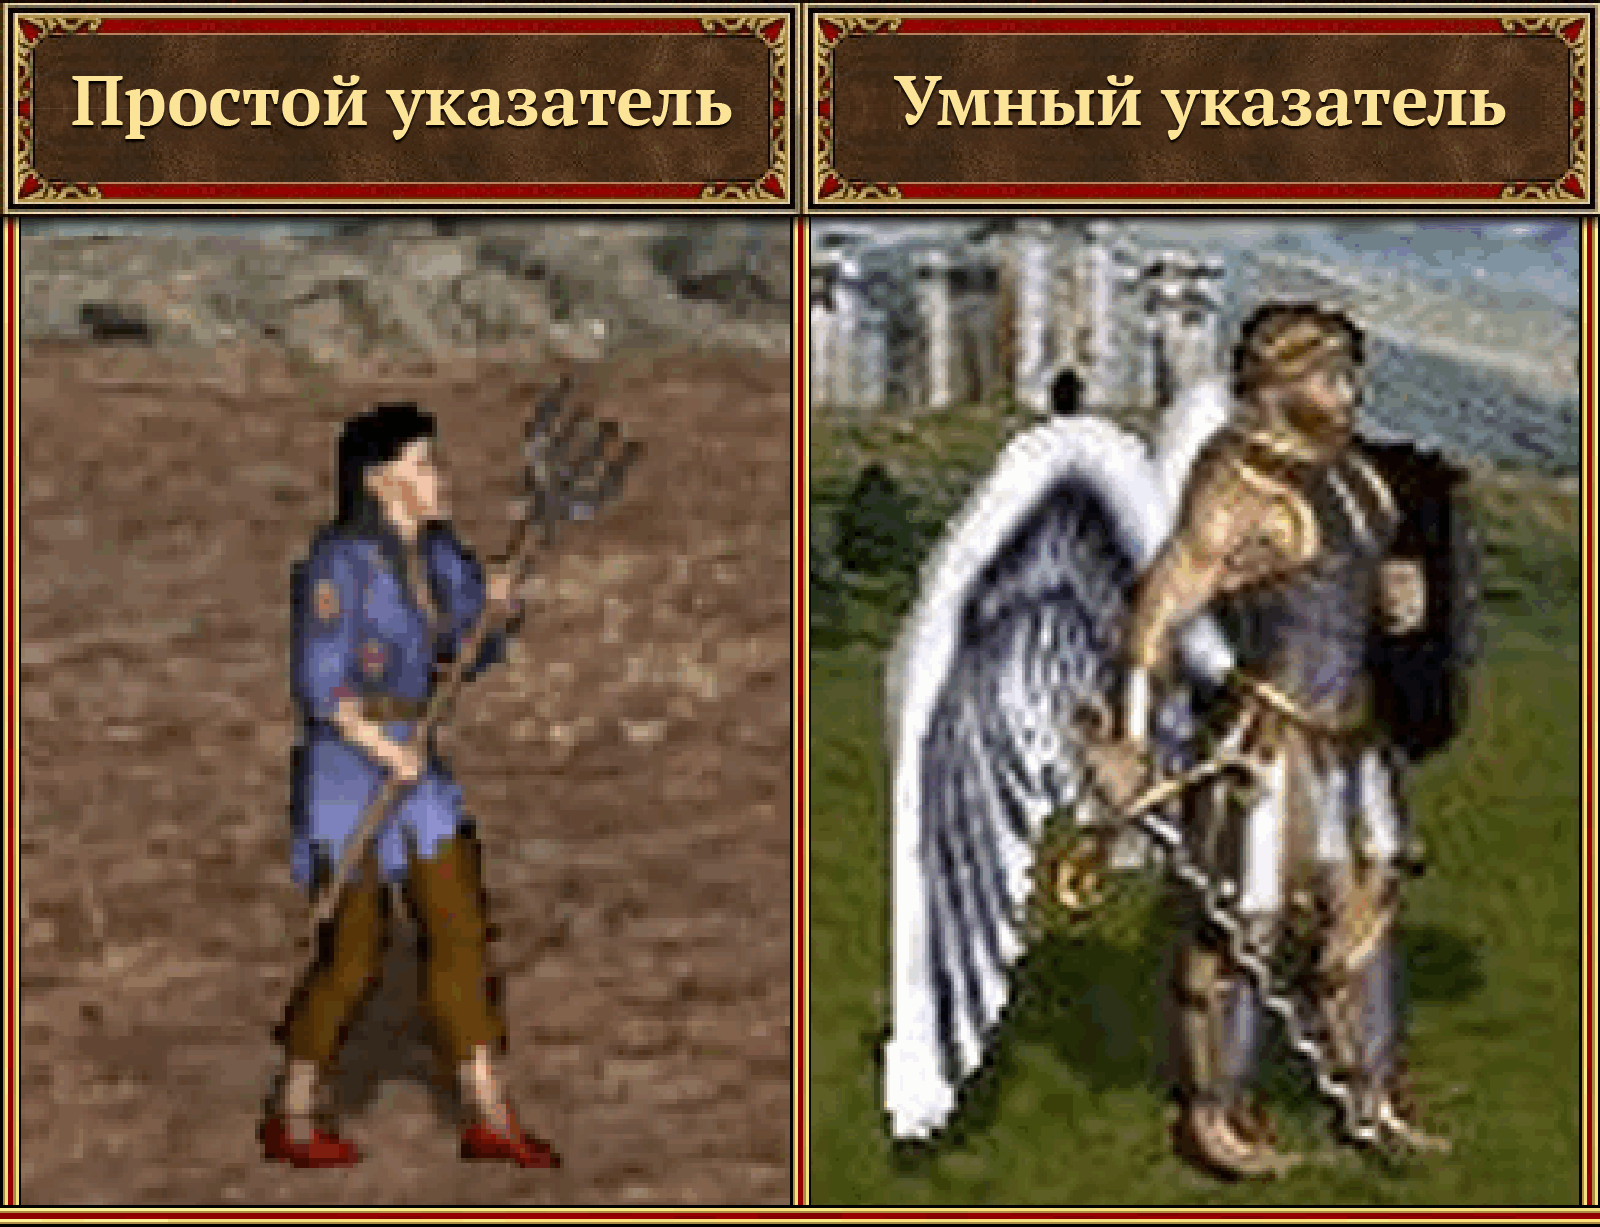 VCMI_ru/image3.png